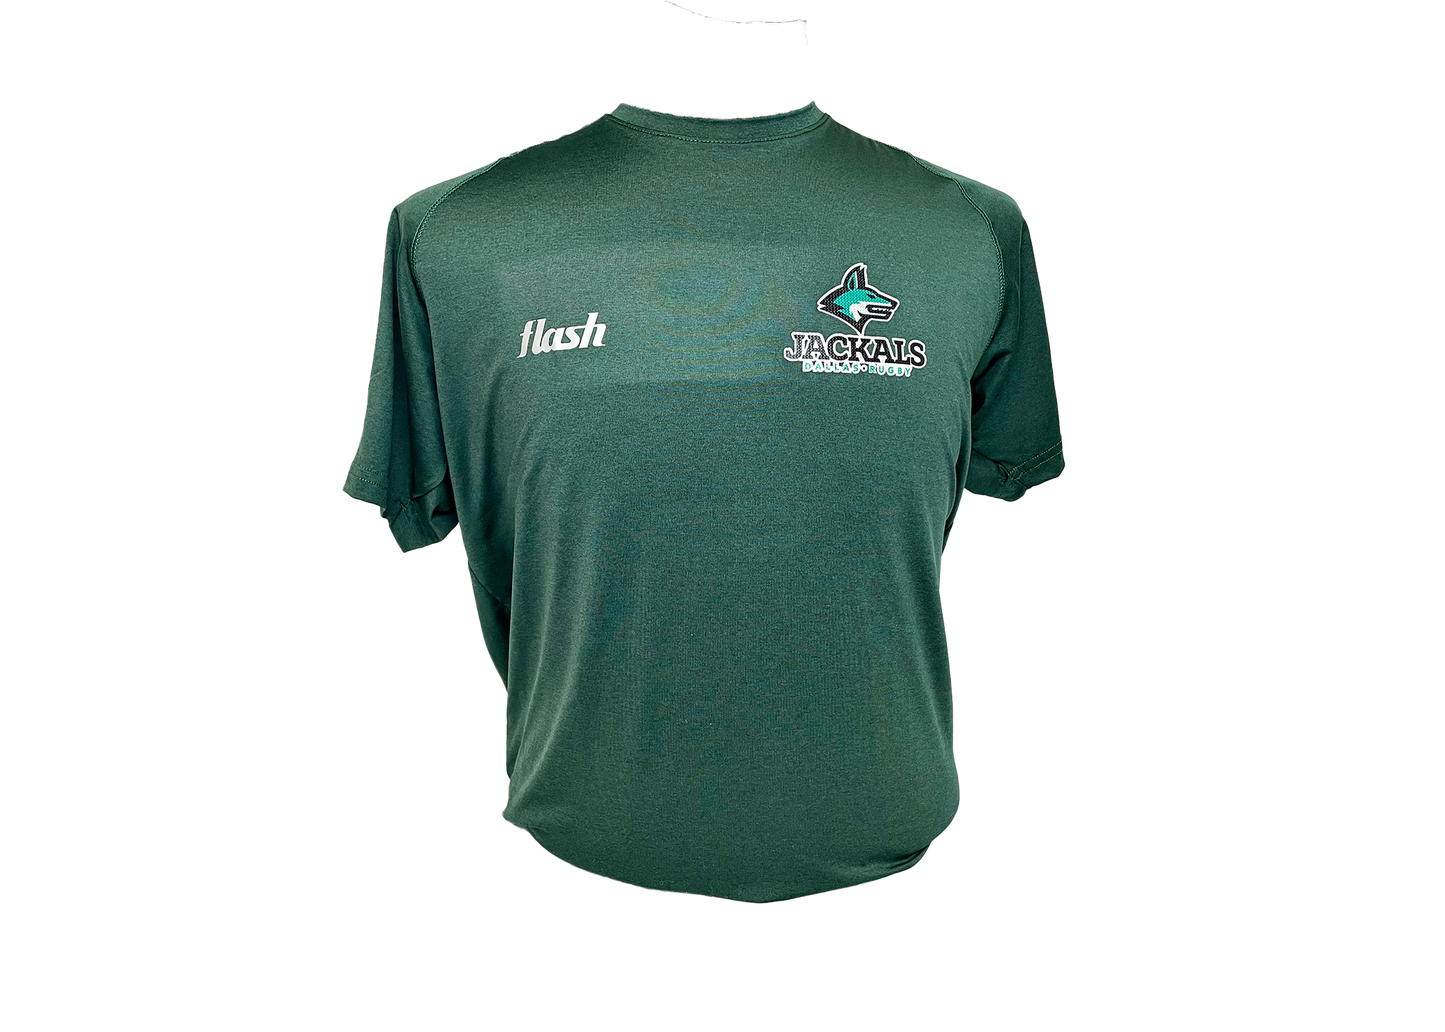 Flash Dry Fit T-Shirt (Green)